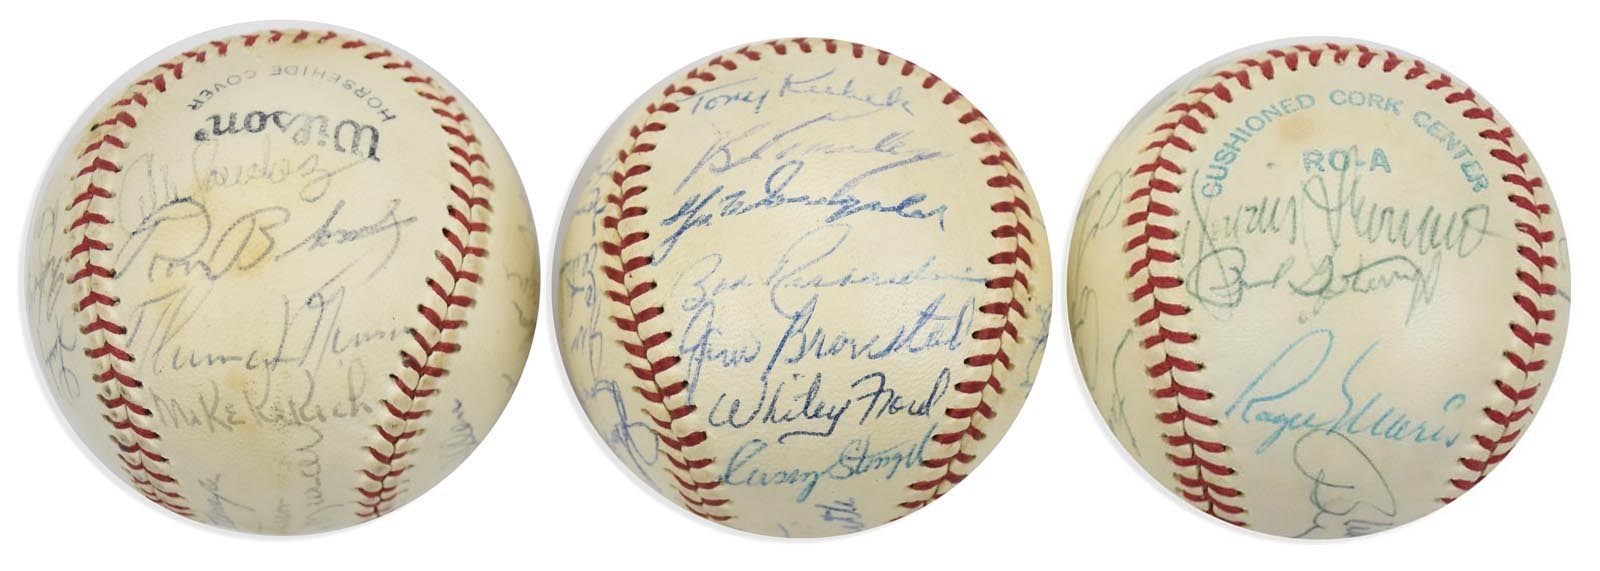 1950s-70s New York Yankees Team Signed Baseballs w/Munson & Maris (3)